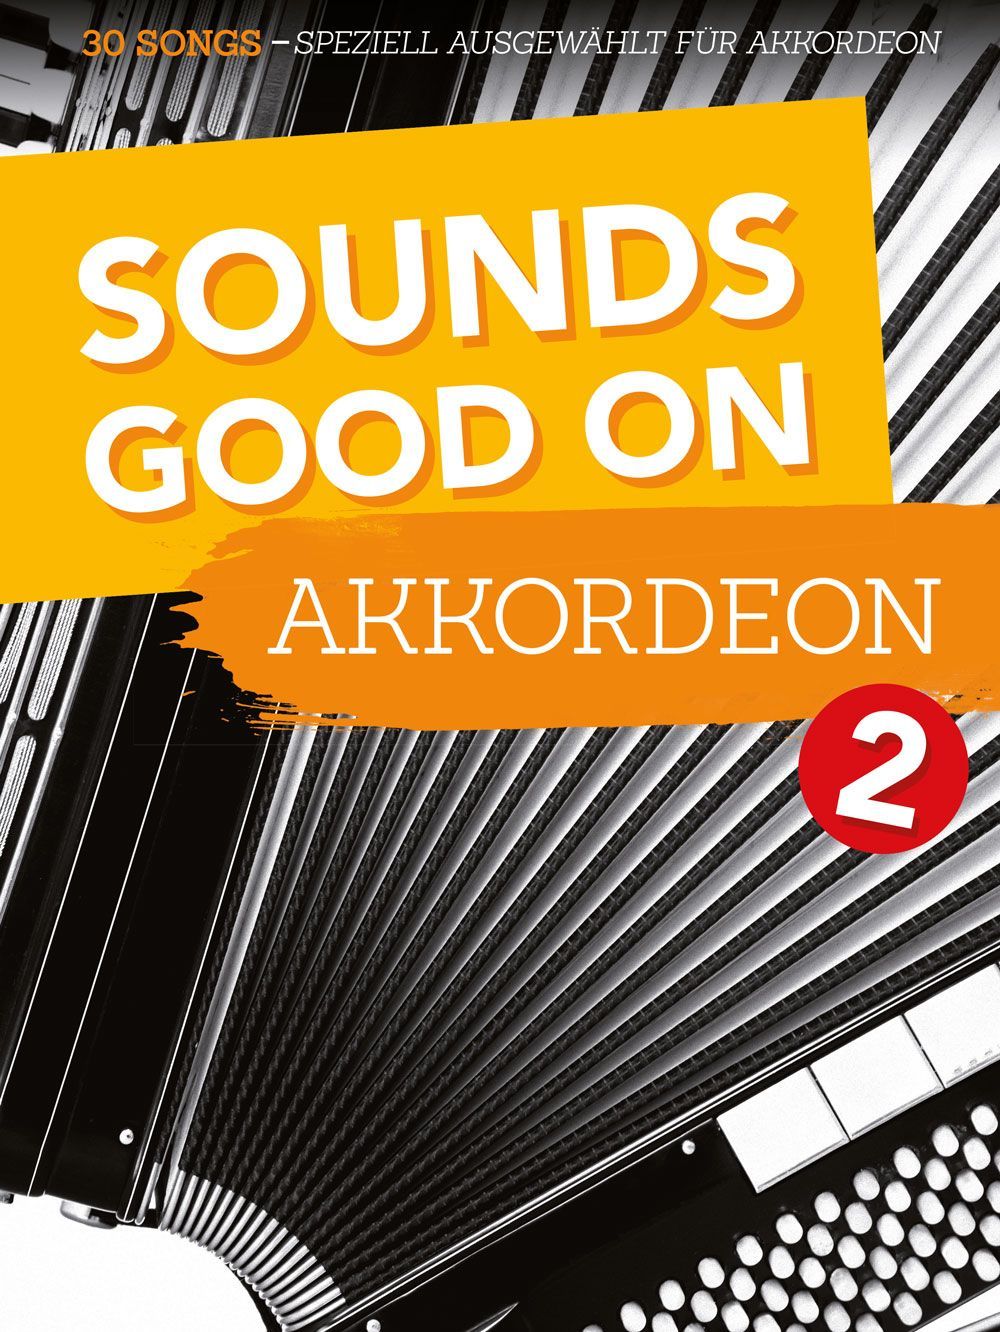 Noten Sounds Good On Akkordeon 2 Bosworth BOE 7941 accordion 30 Chart Hits